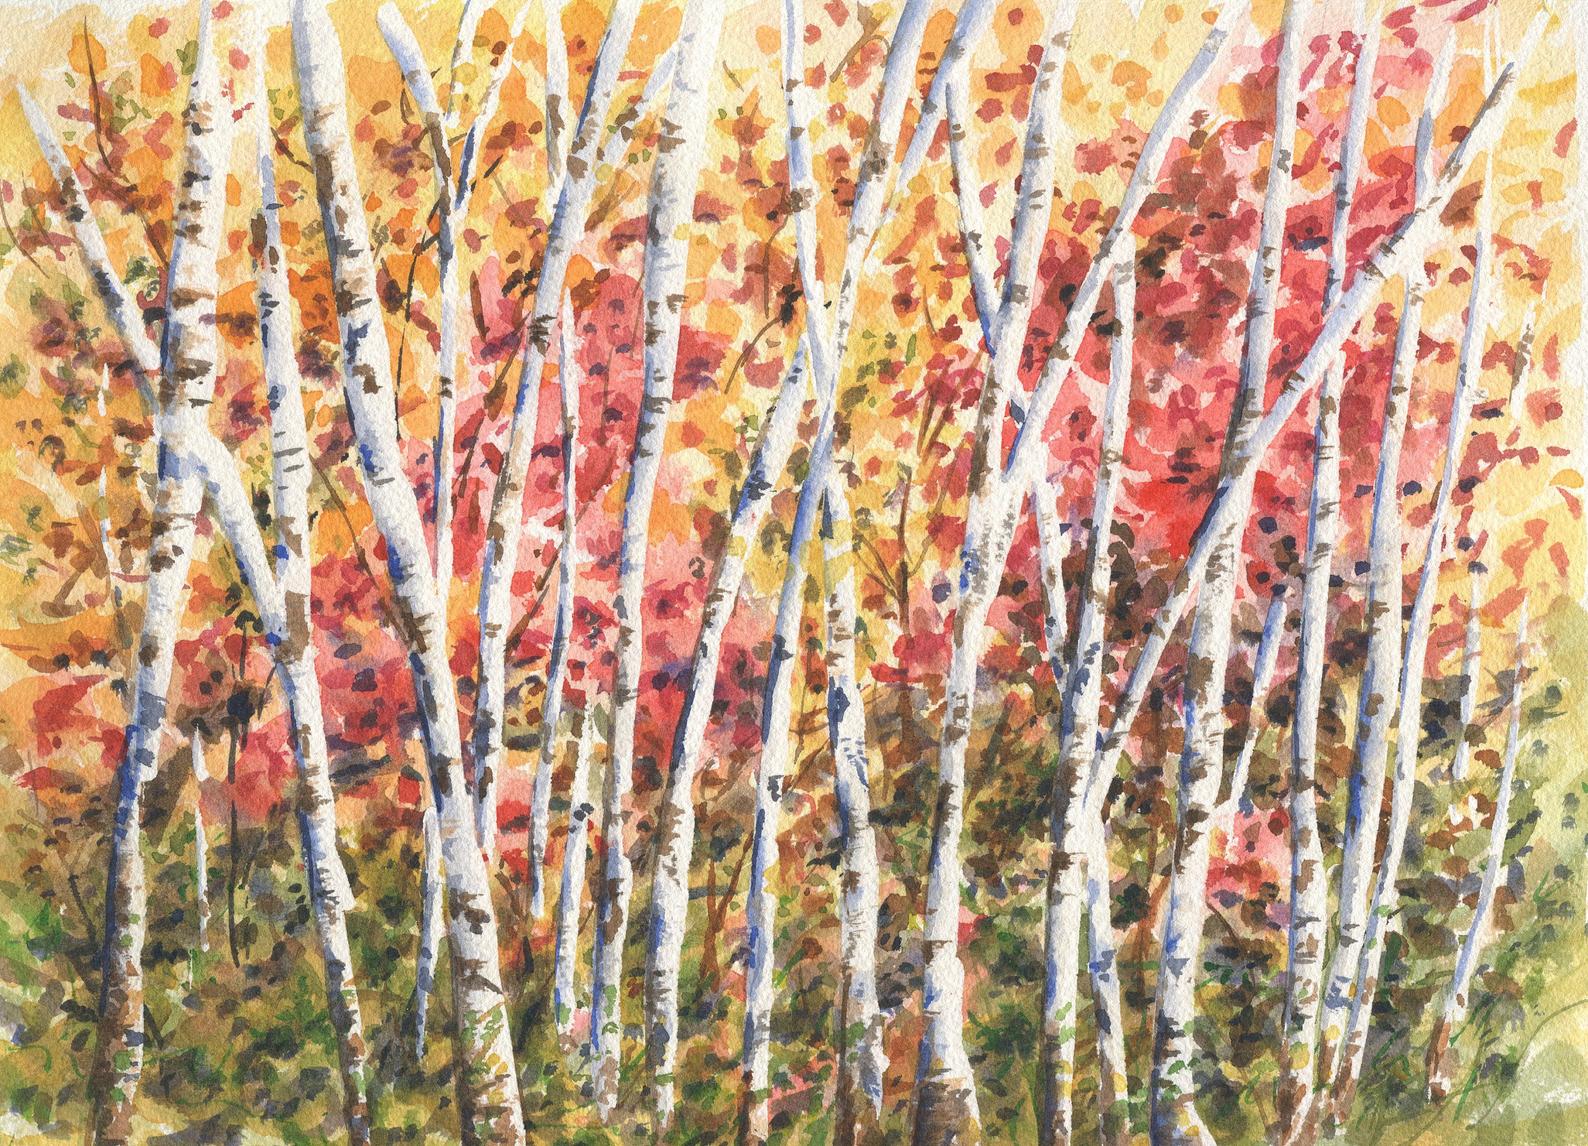 birch tree leaves in fall